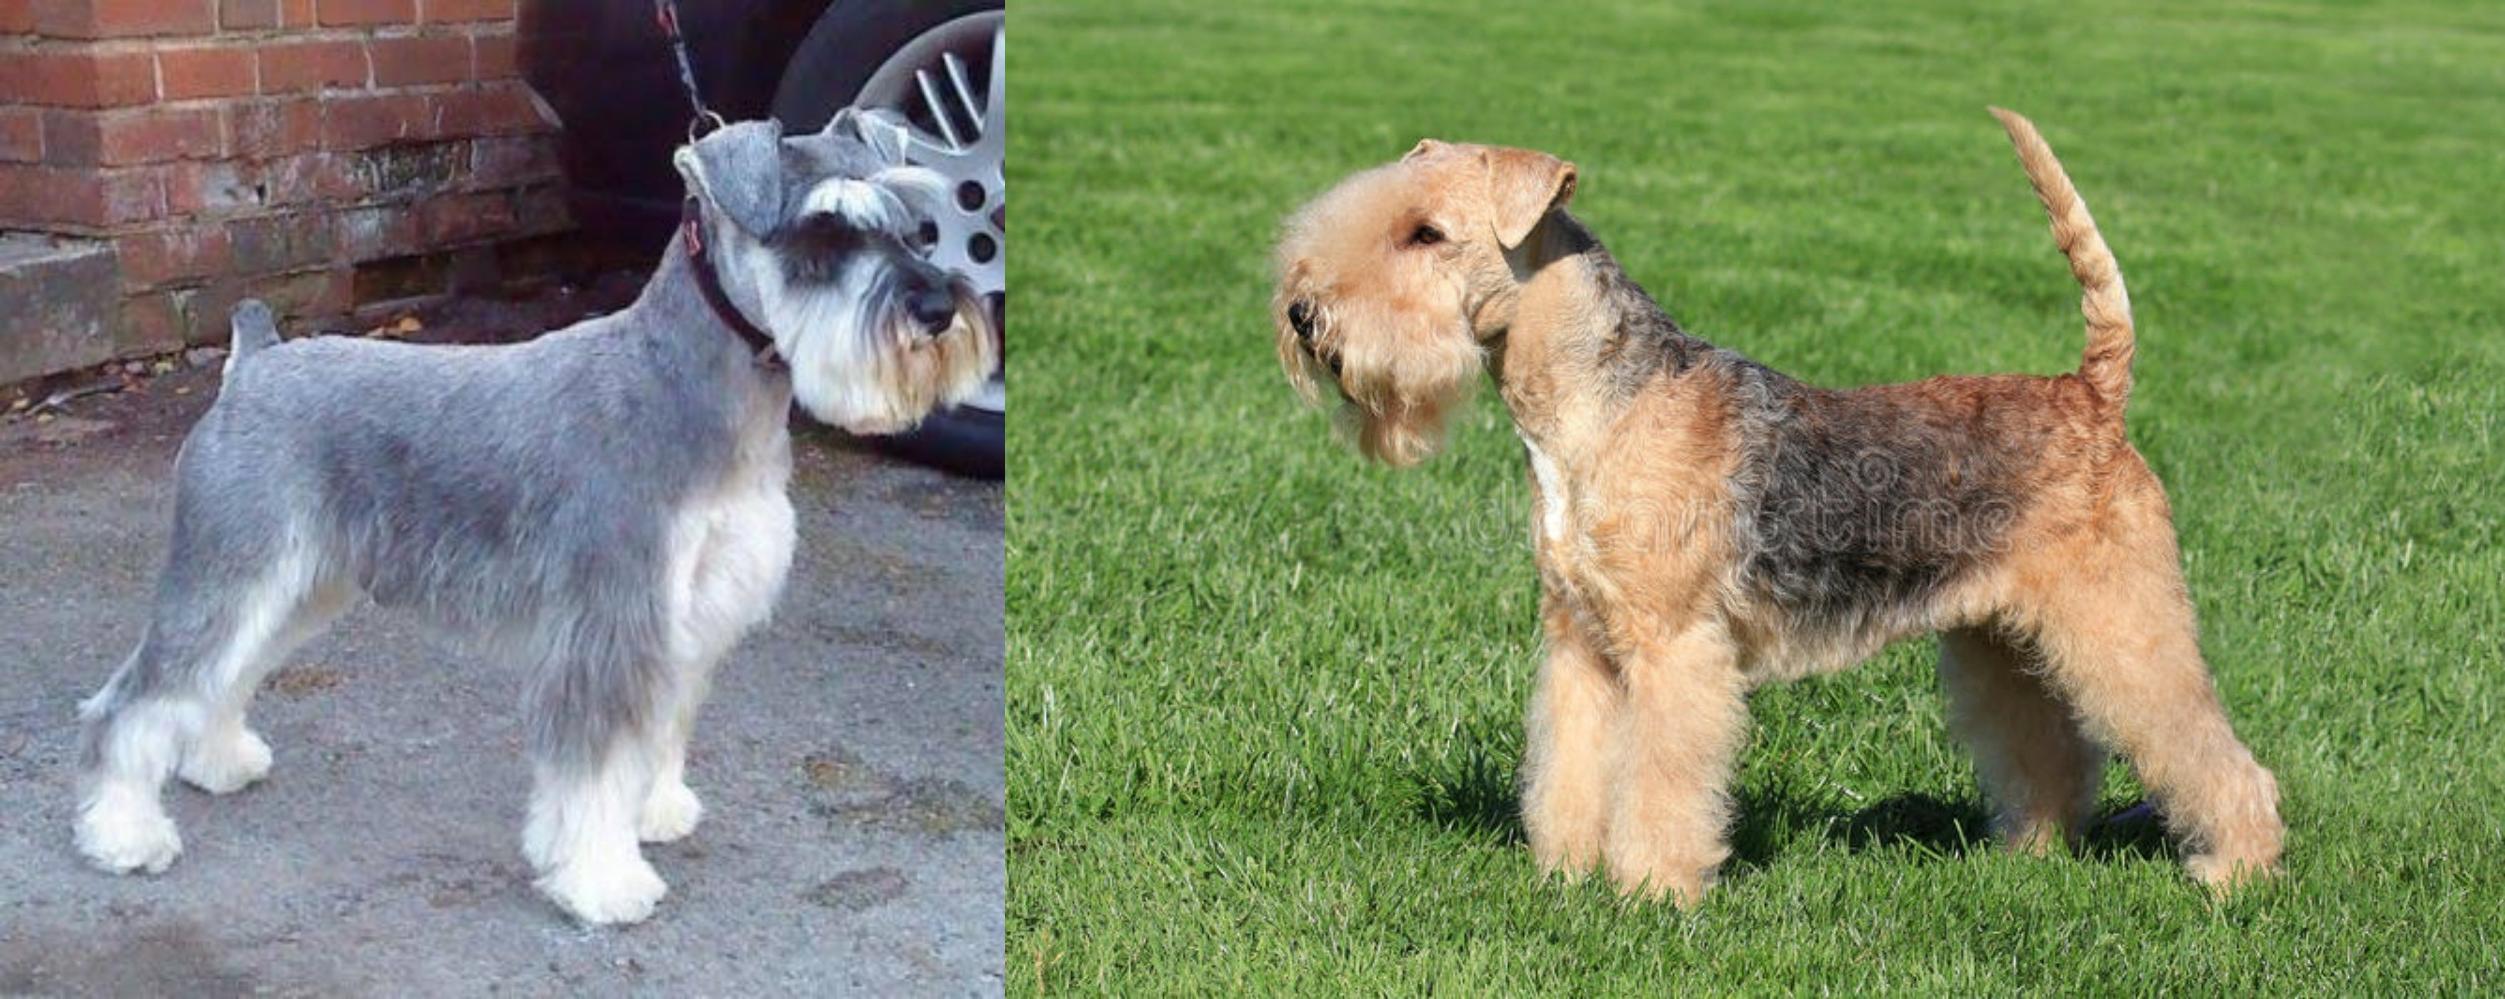 Miniature Schnauzer Vs Lakeland Terrier Breed Comparison